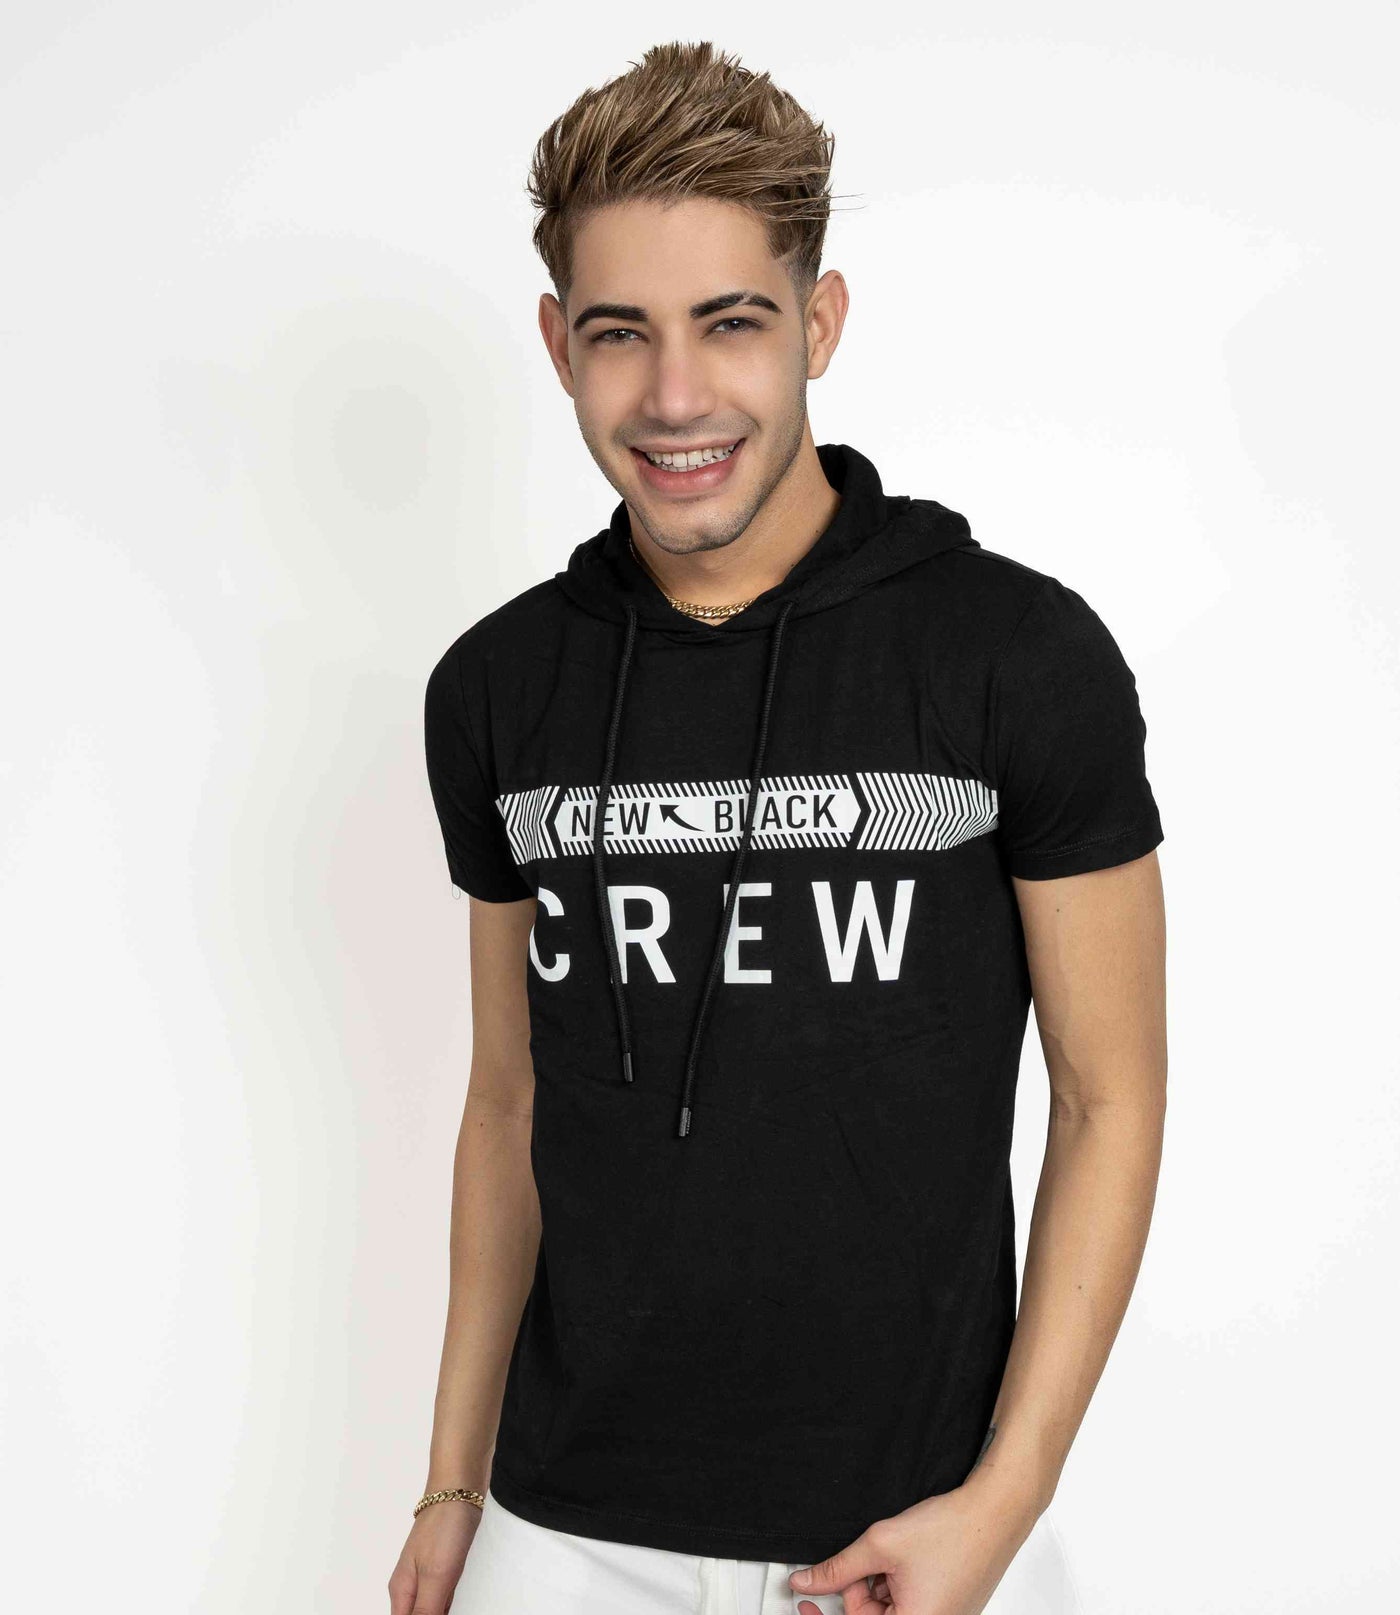 New Black Crew Italian Tshirt